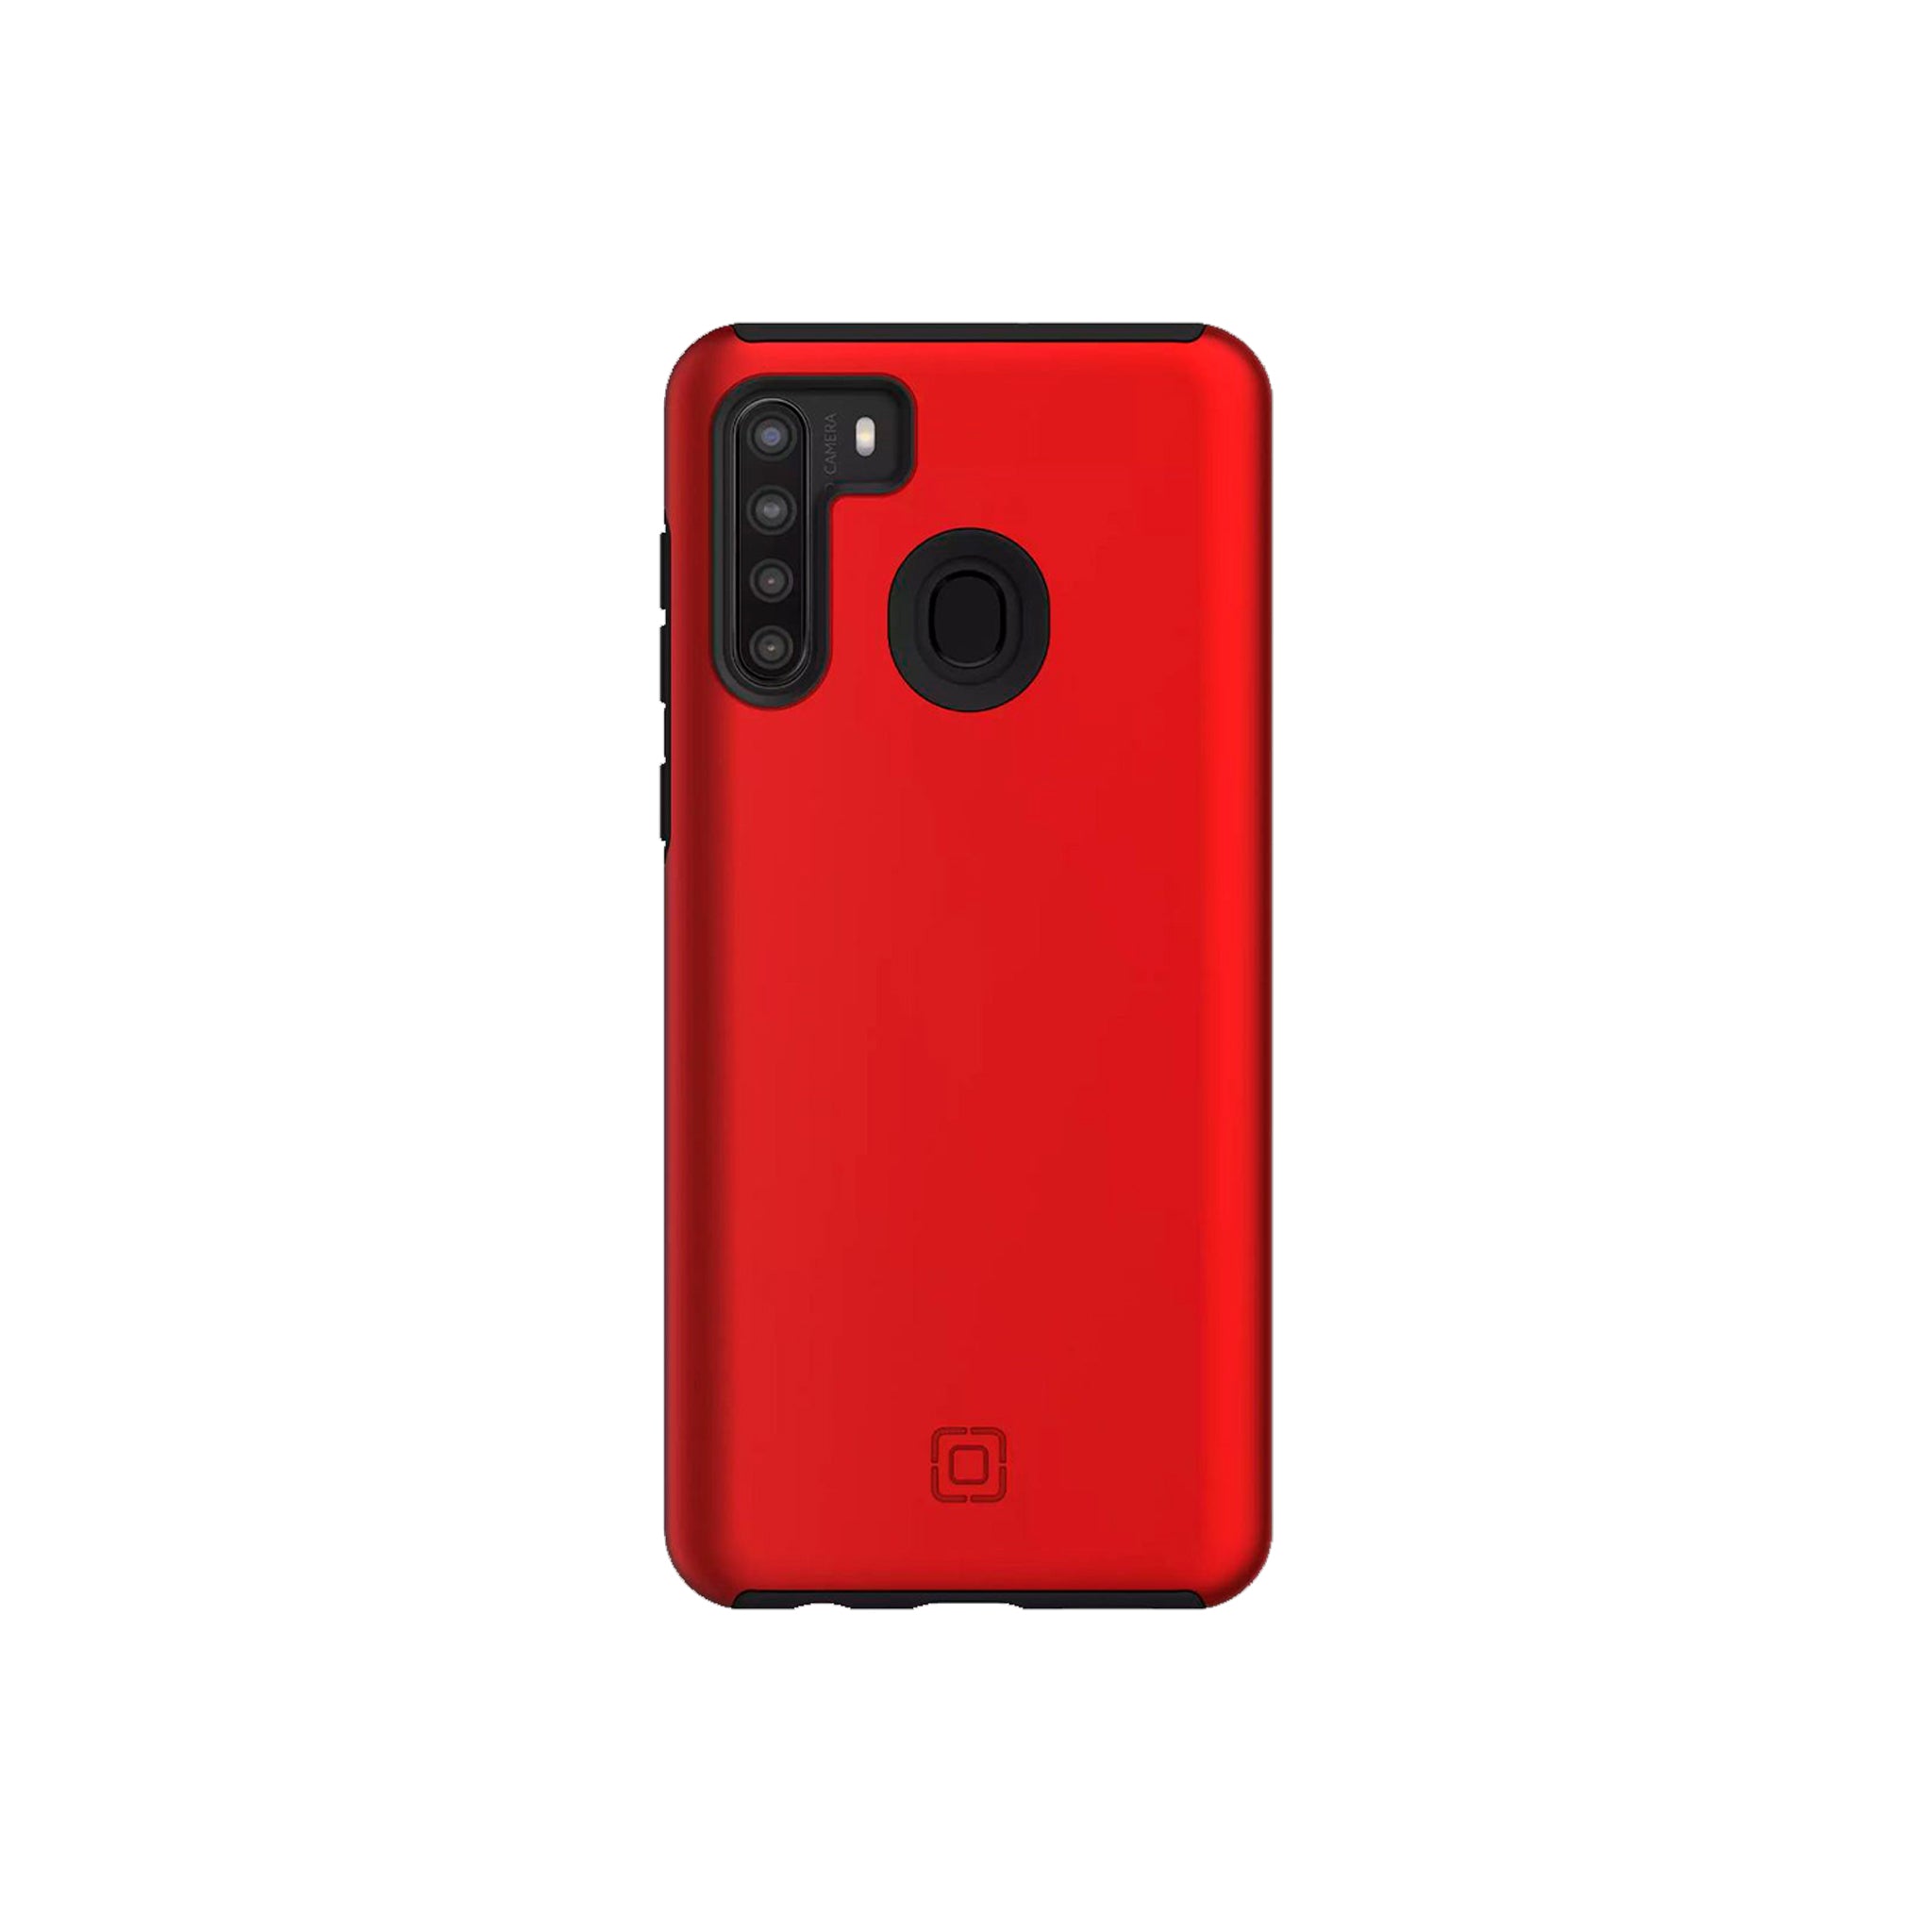 Incipio - DualPro Case For Samsung Galaxy A21 - Iridescent Red And Black